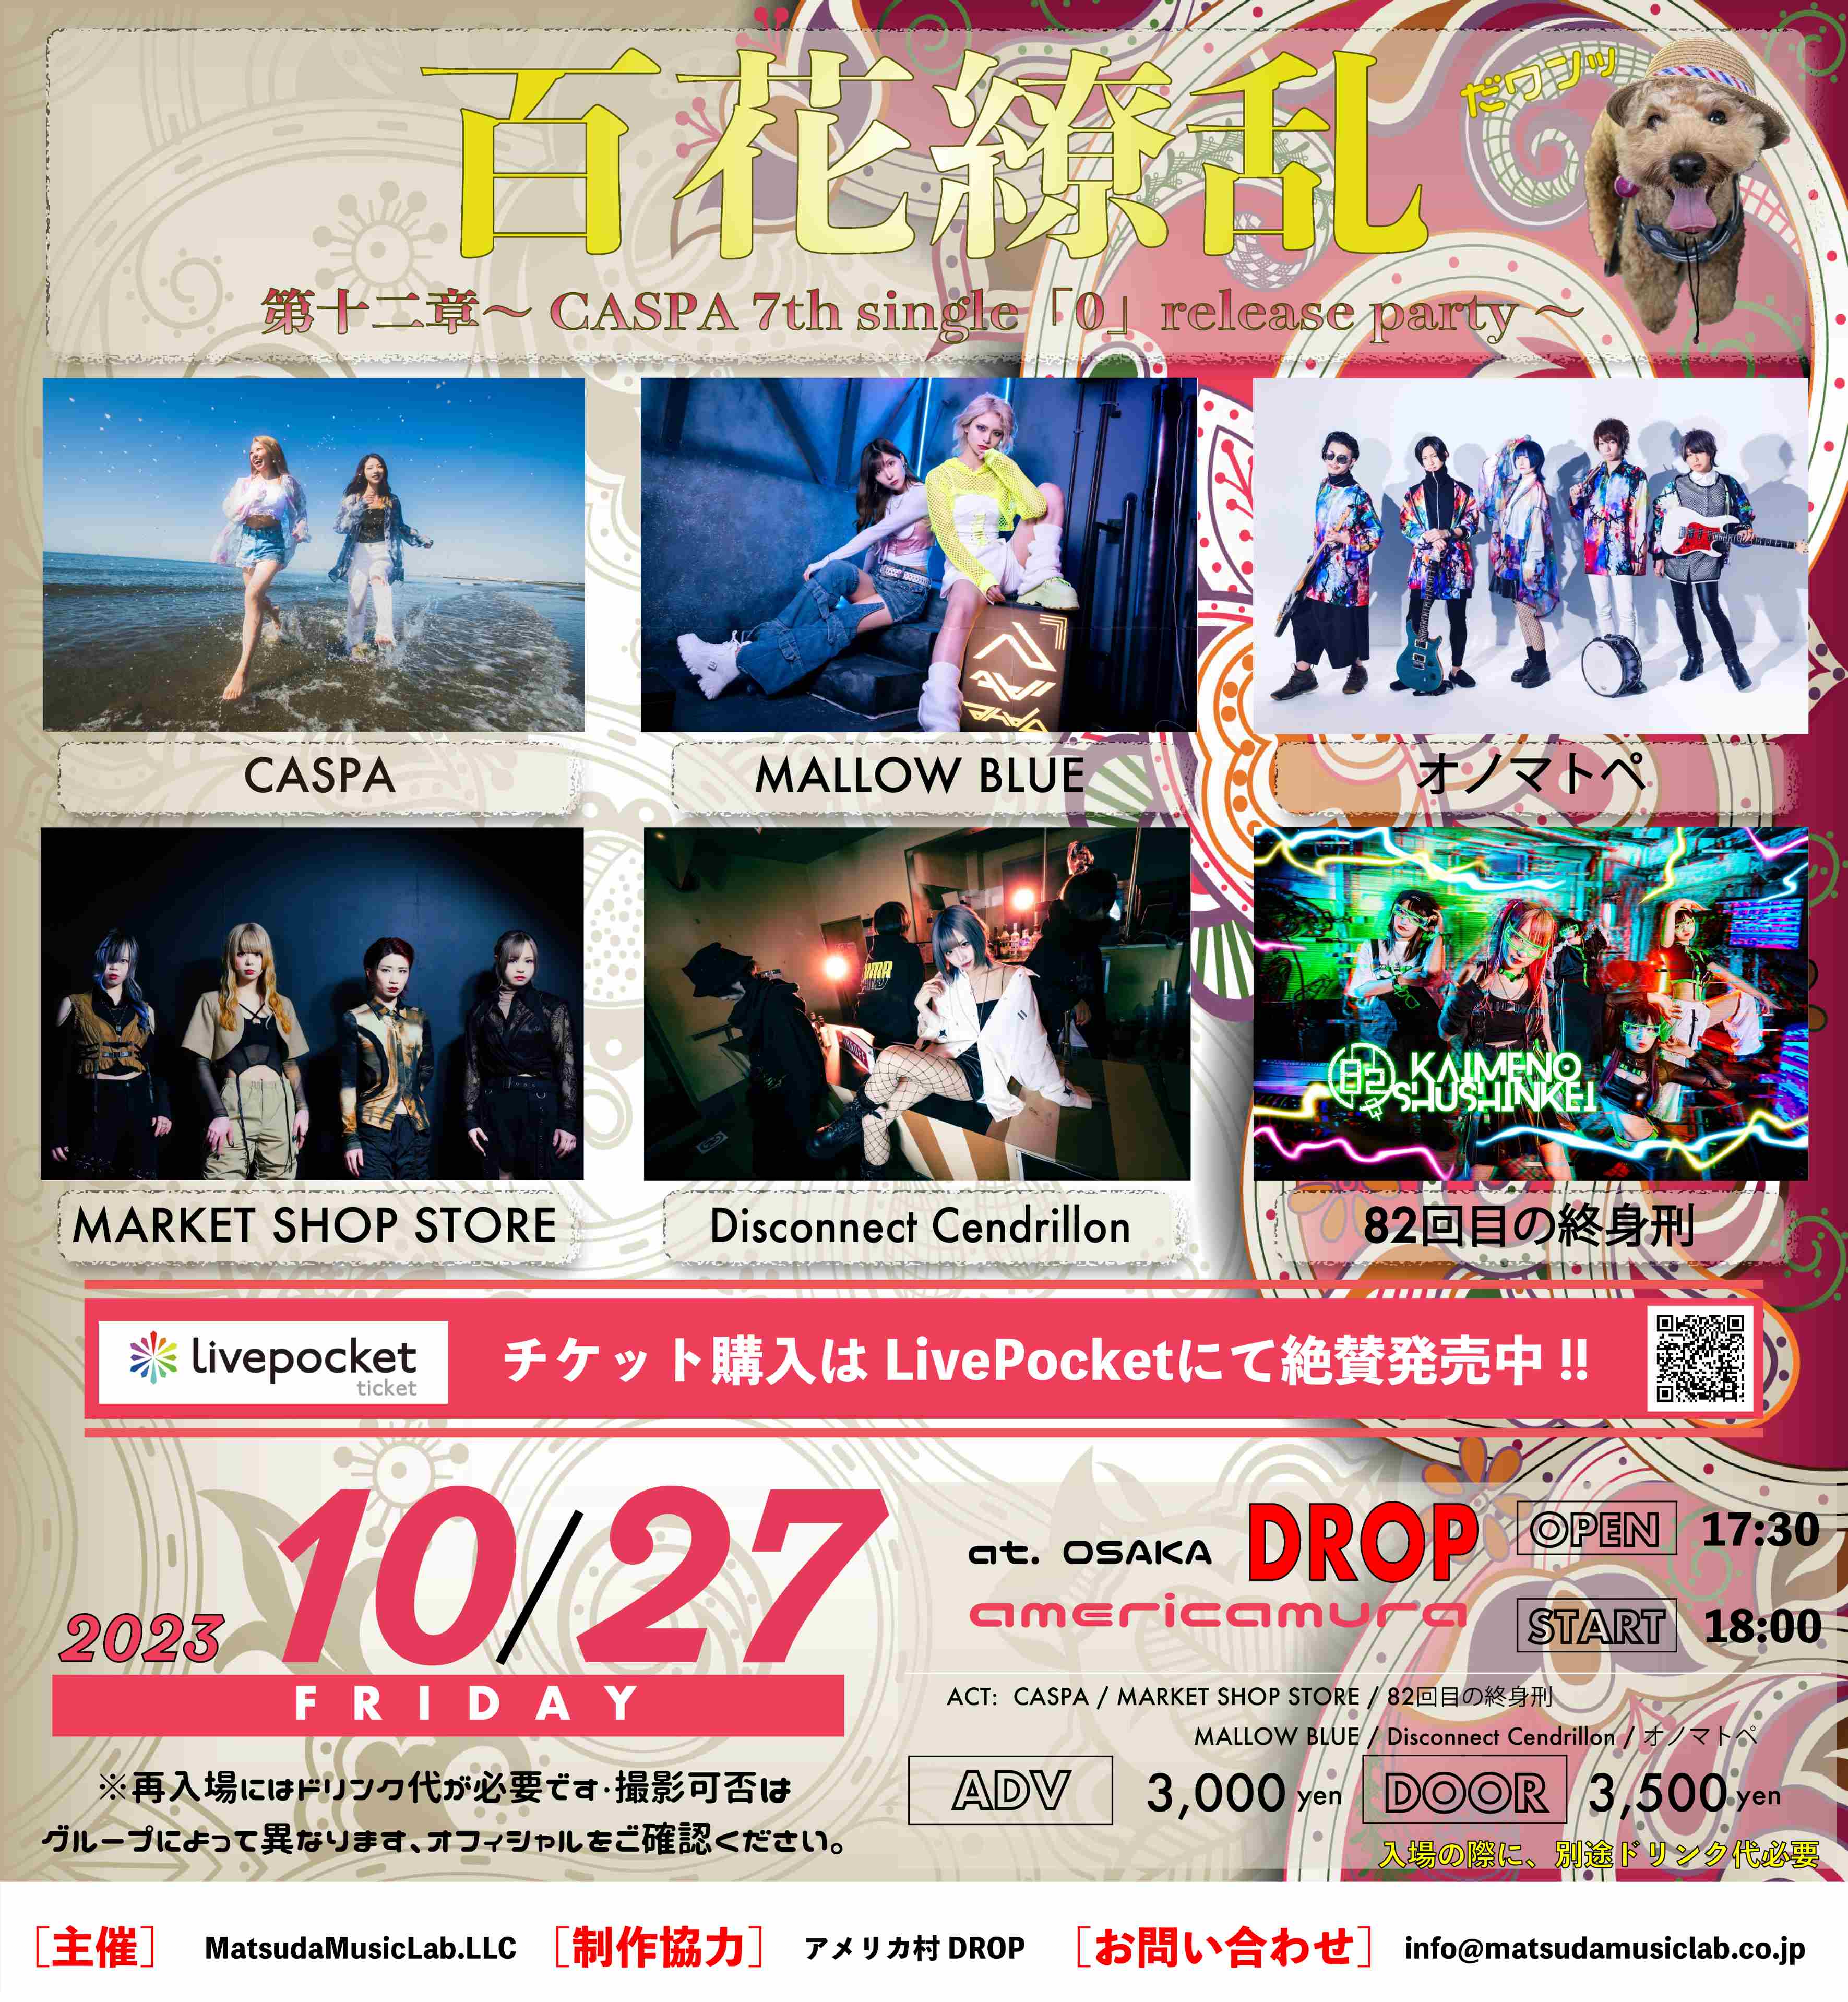 百花繚乱 第十二章～CASPA 7th single「0」release party～